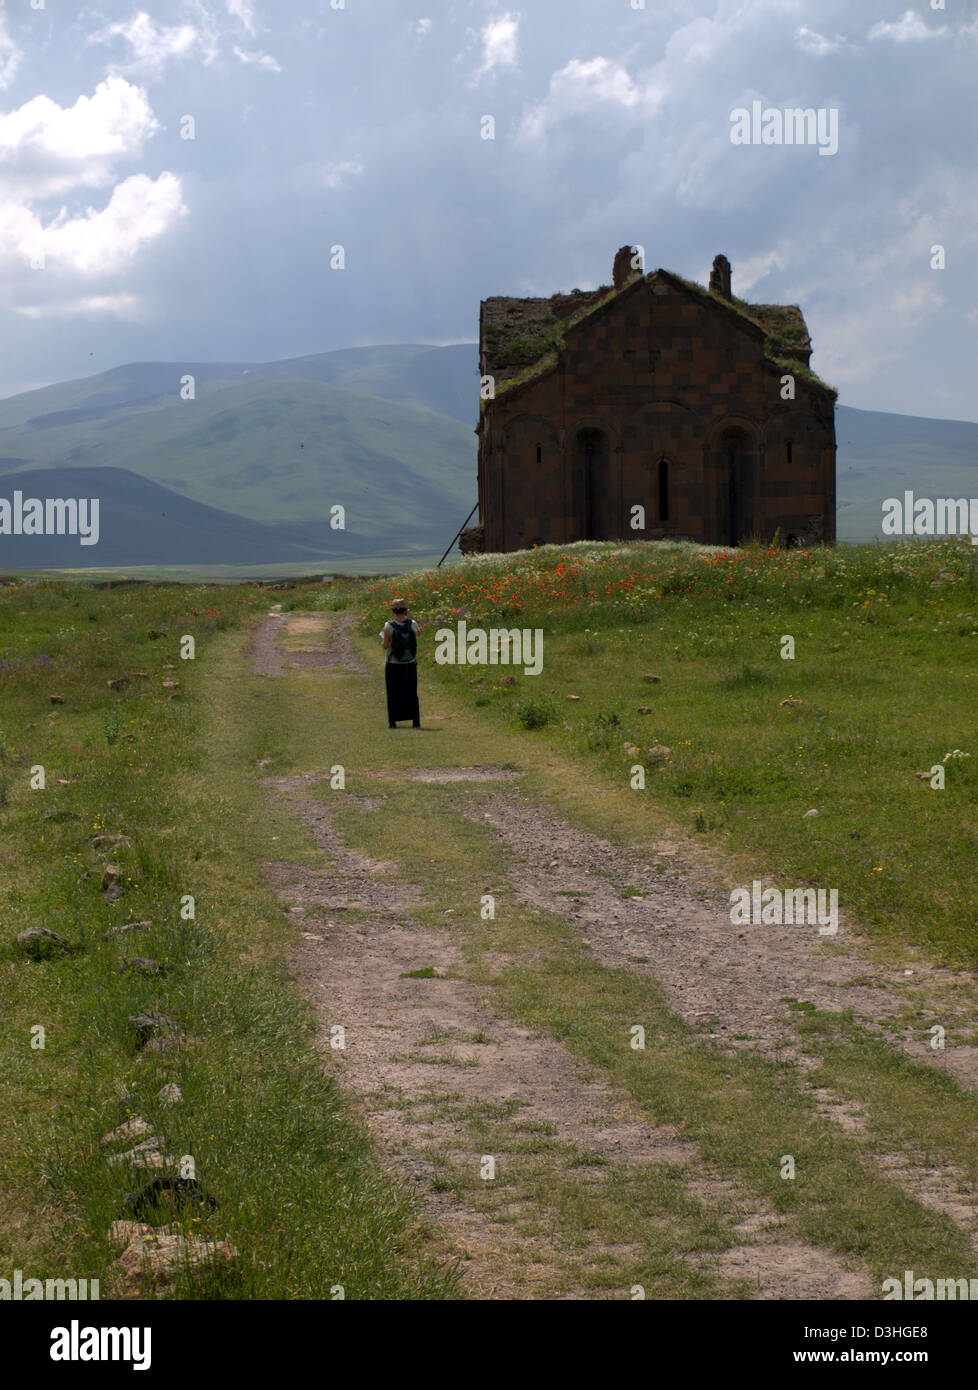 Ruins of the ancient Armenia city of Ani, near Kars, Eastern Turkey. Stock Photo